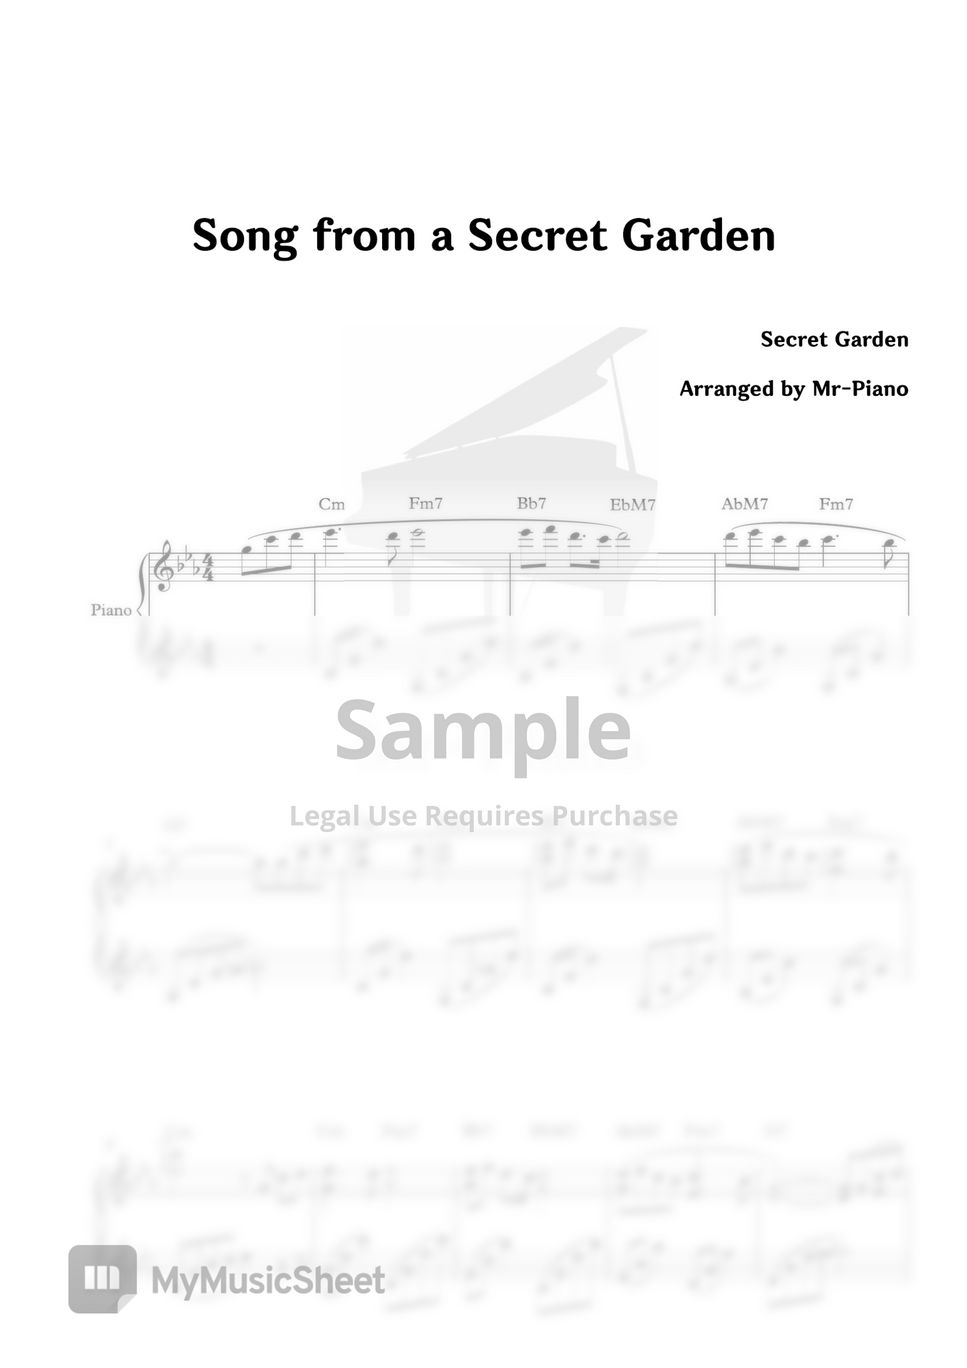 Secret Garden - Song from a Secret Garden by Mr-Piano